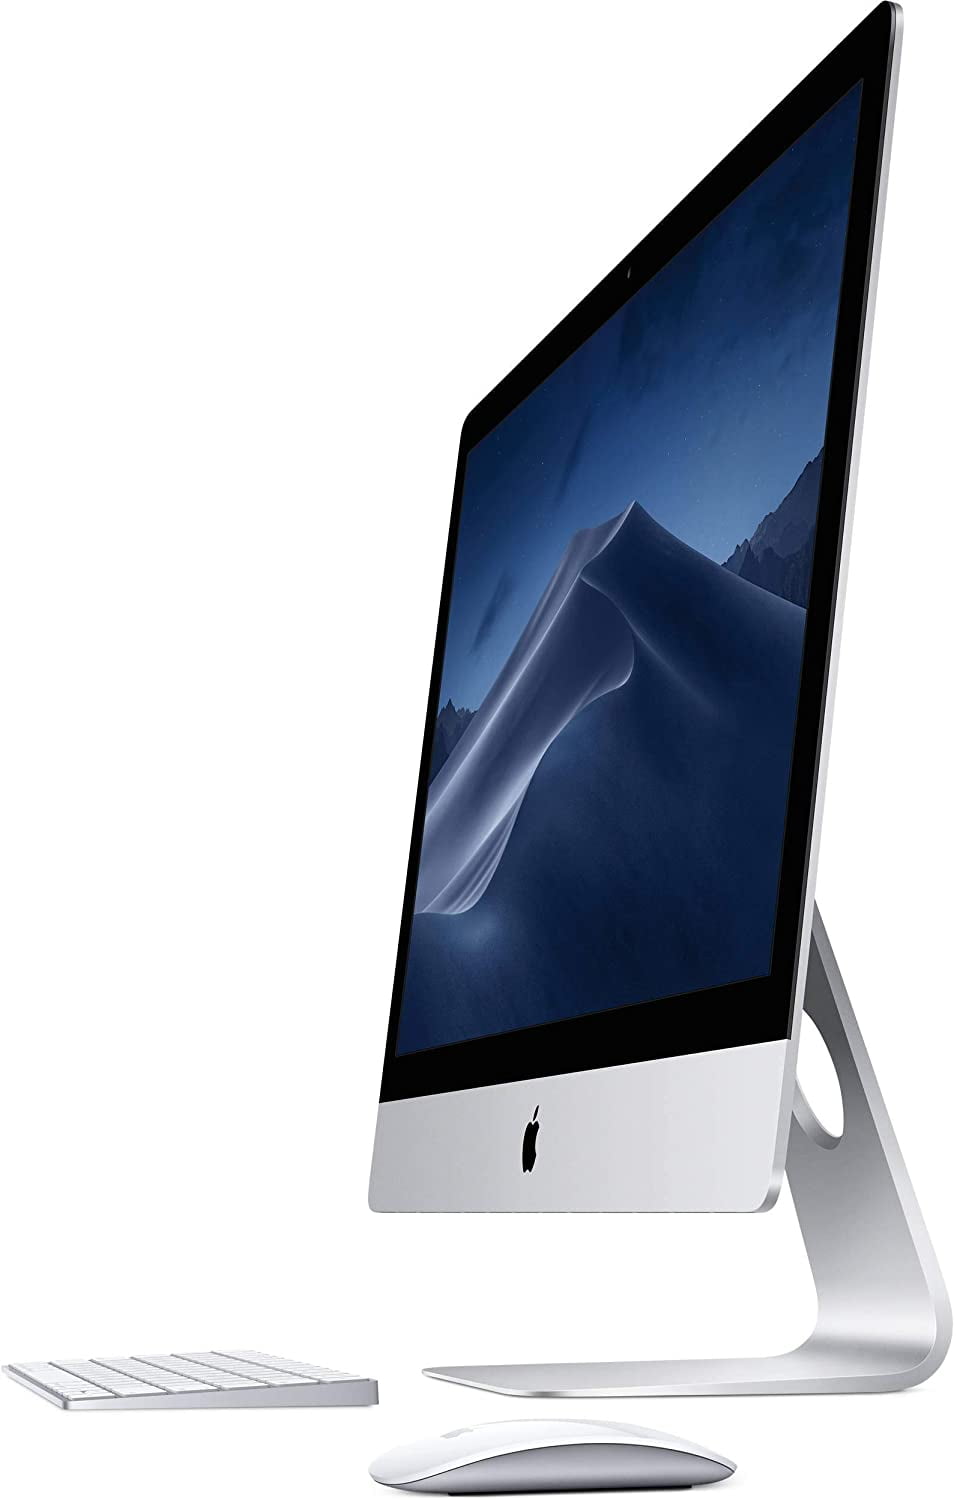 USED 2013 iMac Core i5 3.4GHz 8GB RAM 1TB HDD ME089LL/A -